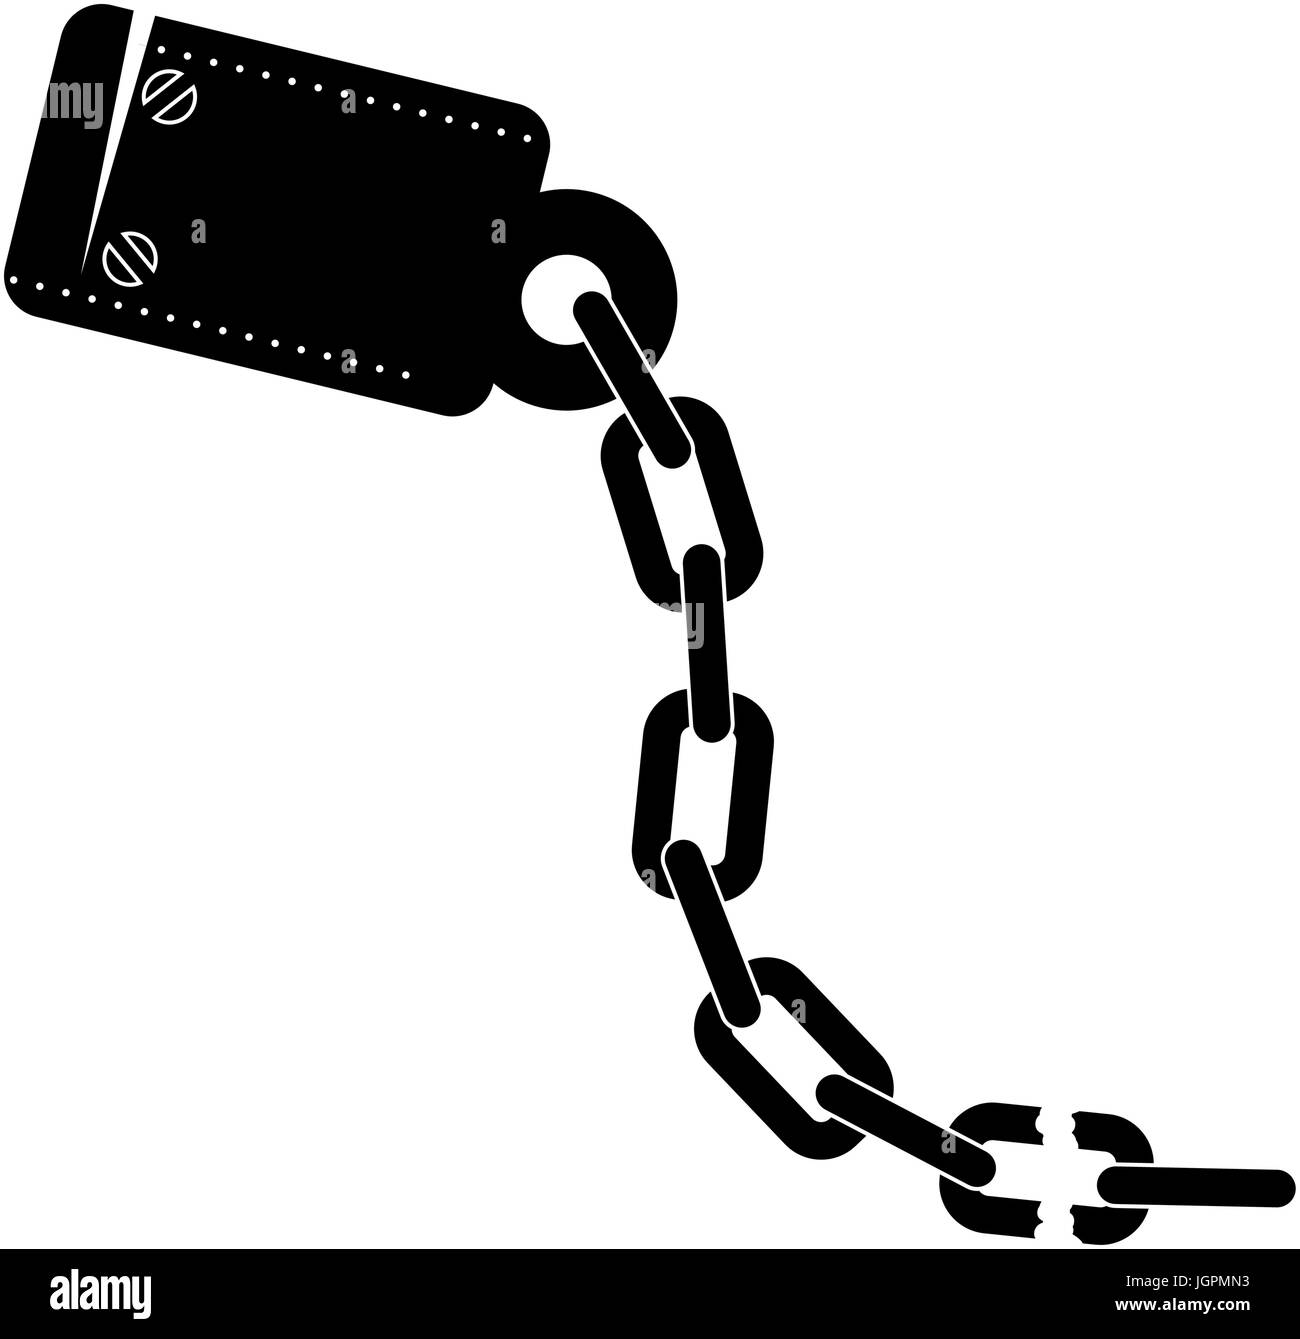 Chain of slavery Stock Vector